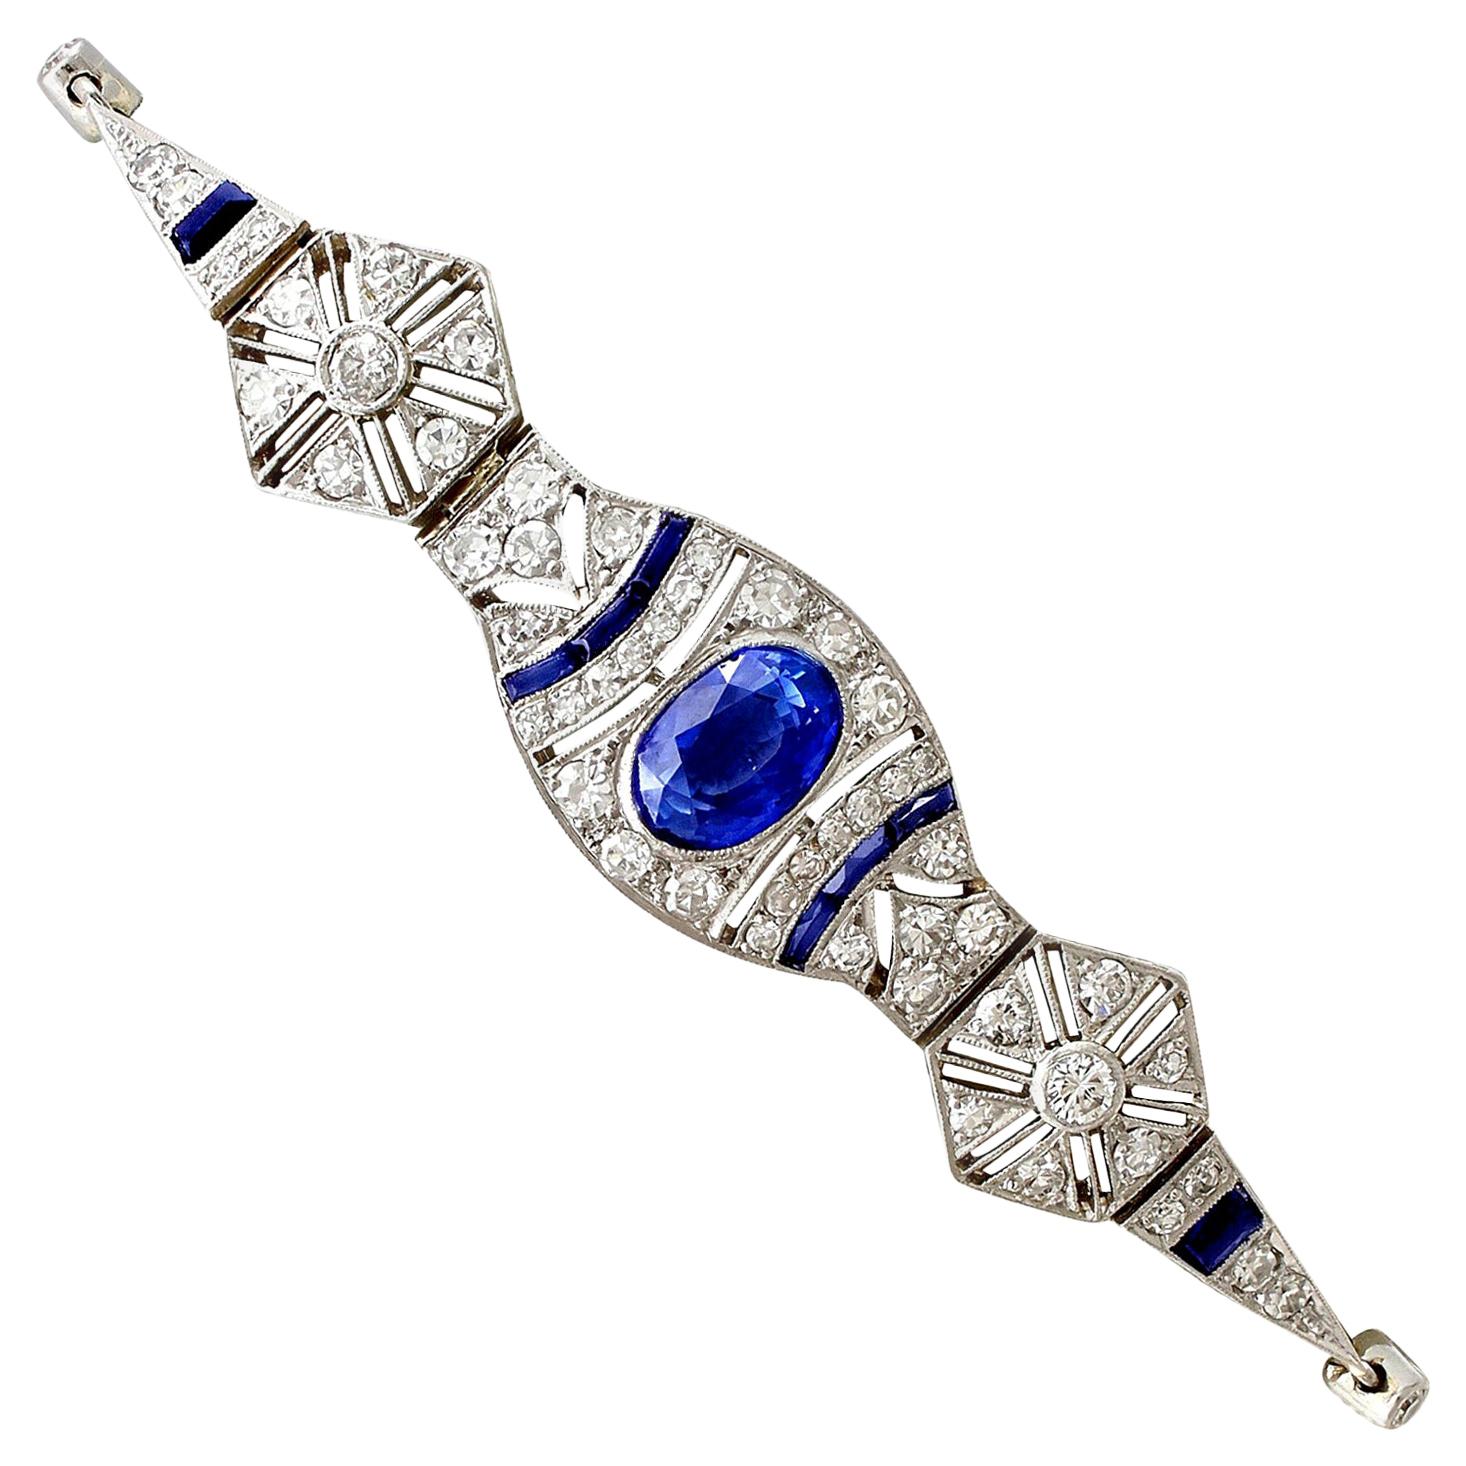 1920s Art Deco 2.59 Carat Sapphire and 1.72 Carat Diamond White Gold Bracelet